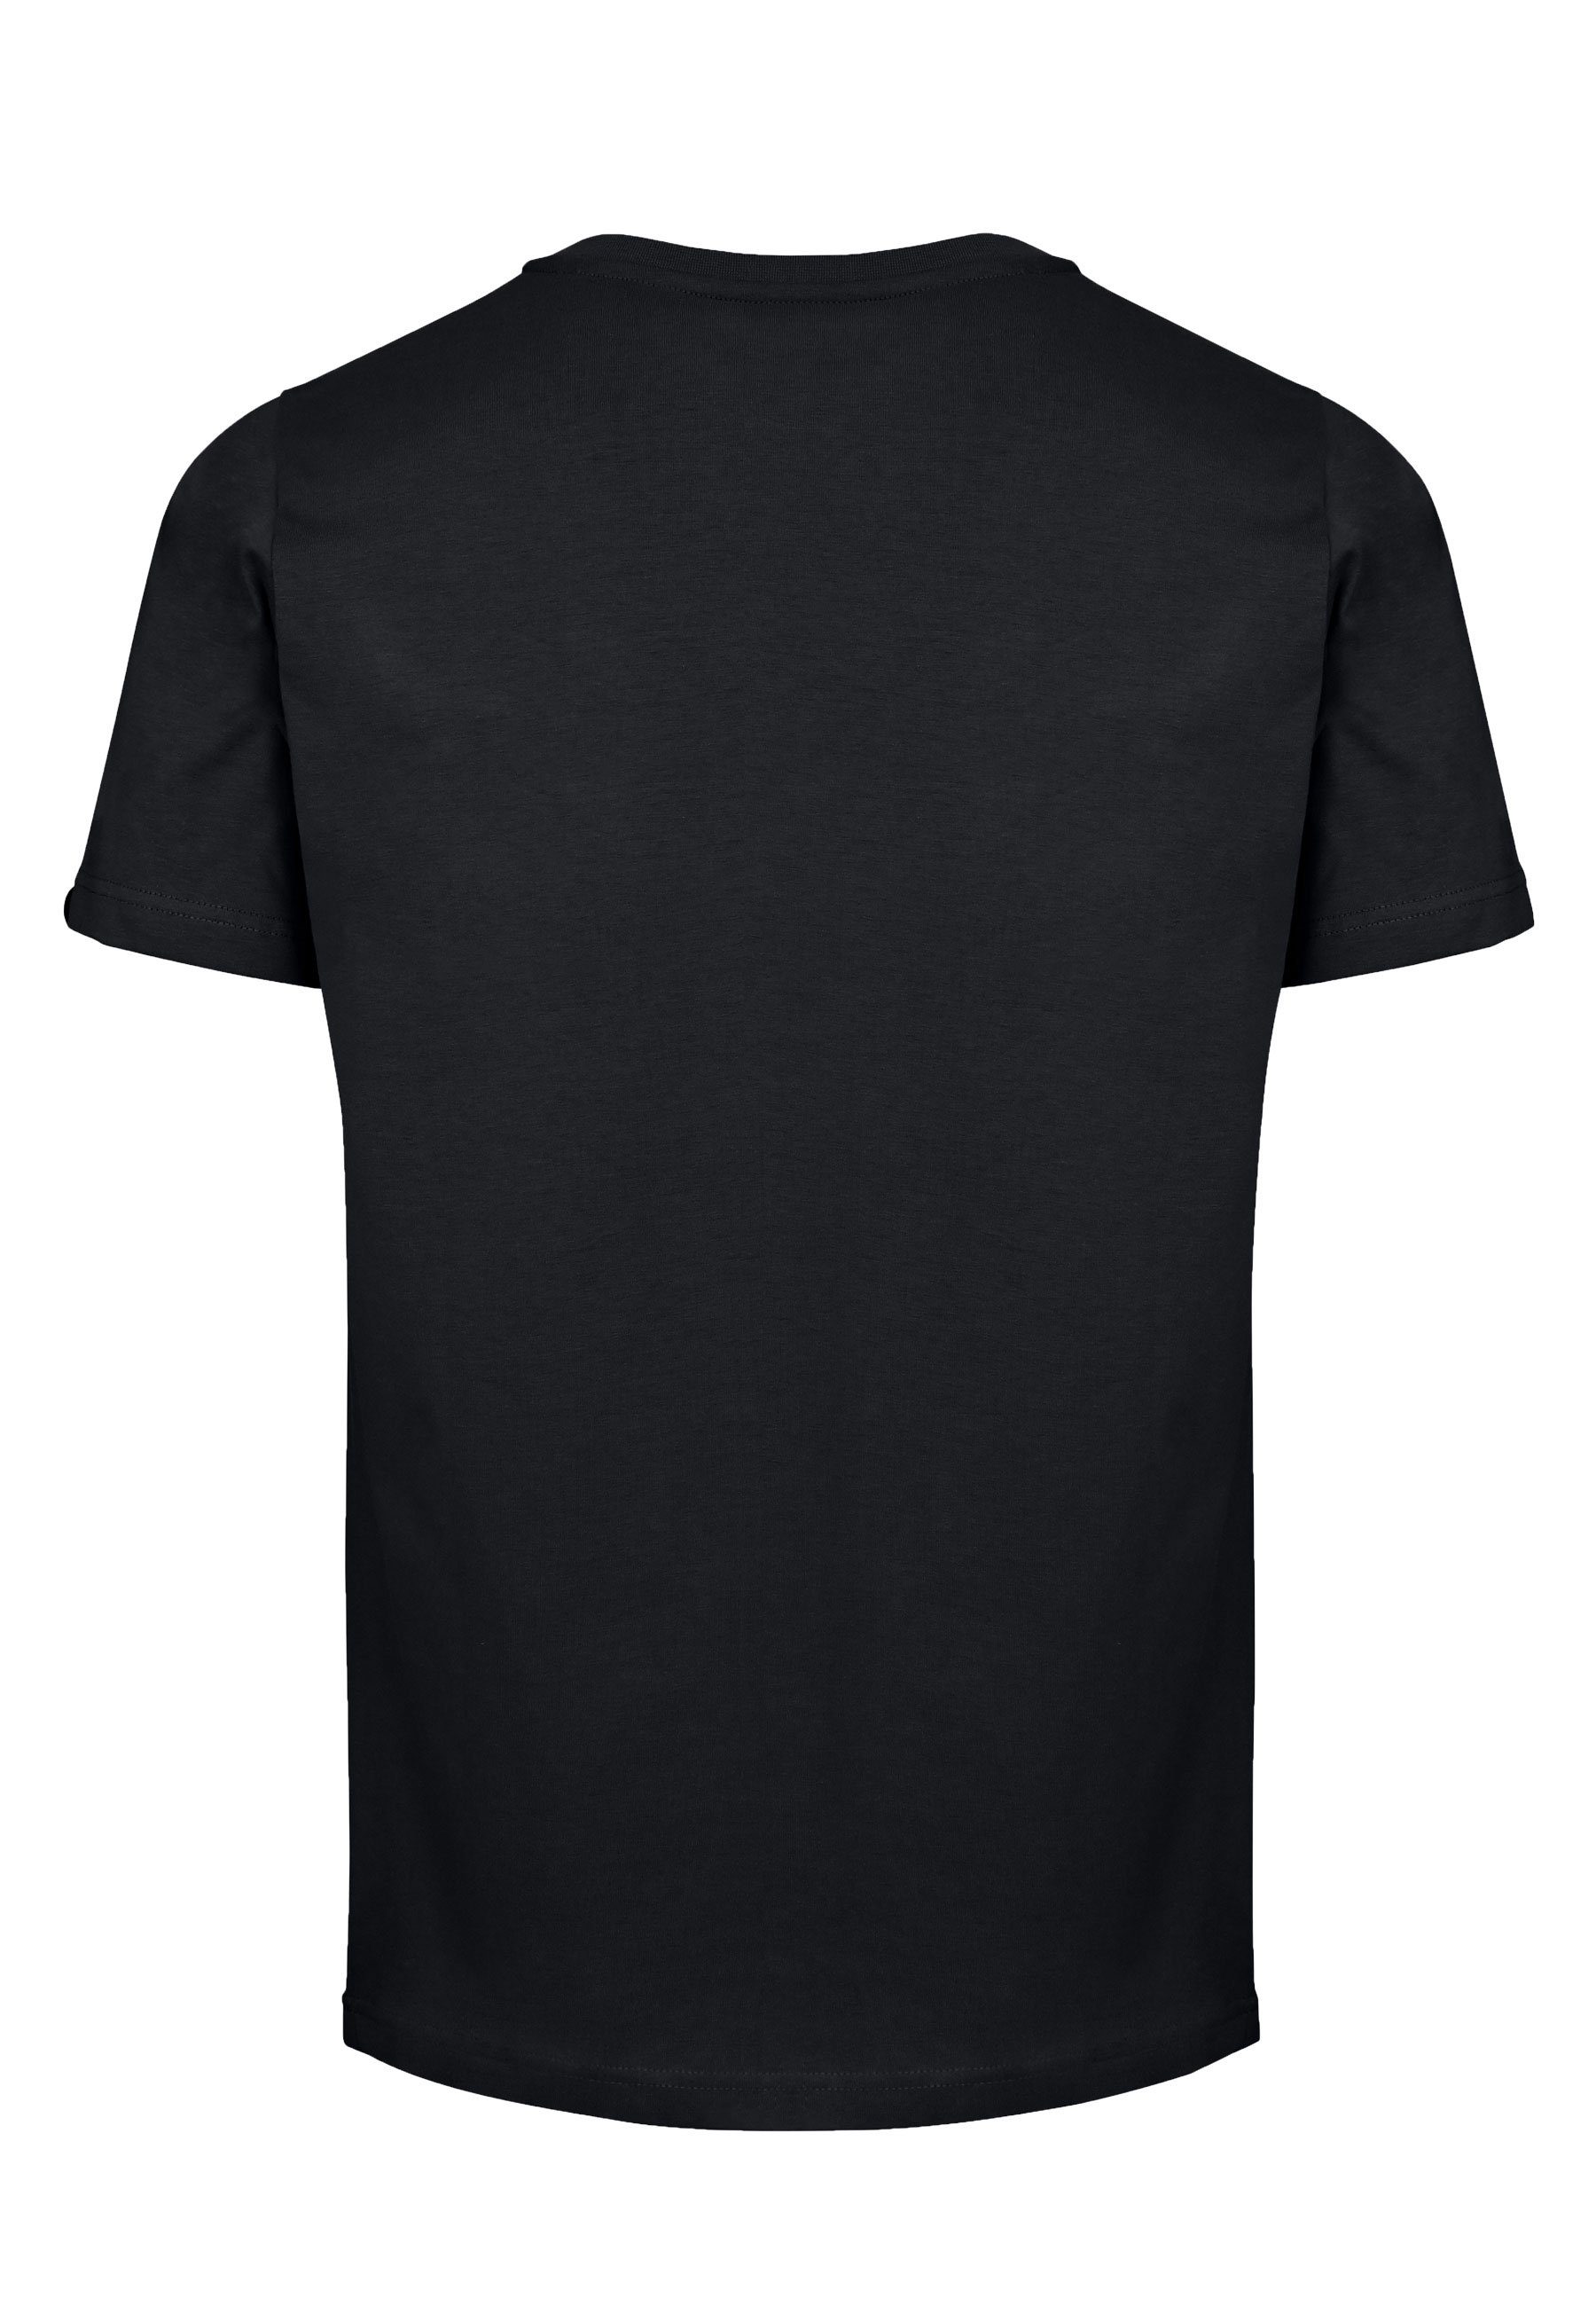 Gassenhauer Elkline Print Bulli VW Brust black Retro T-Shirt